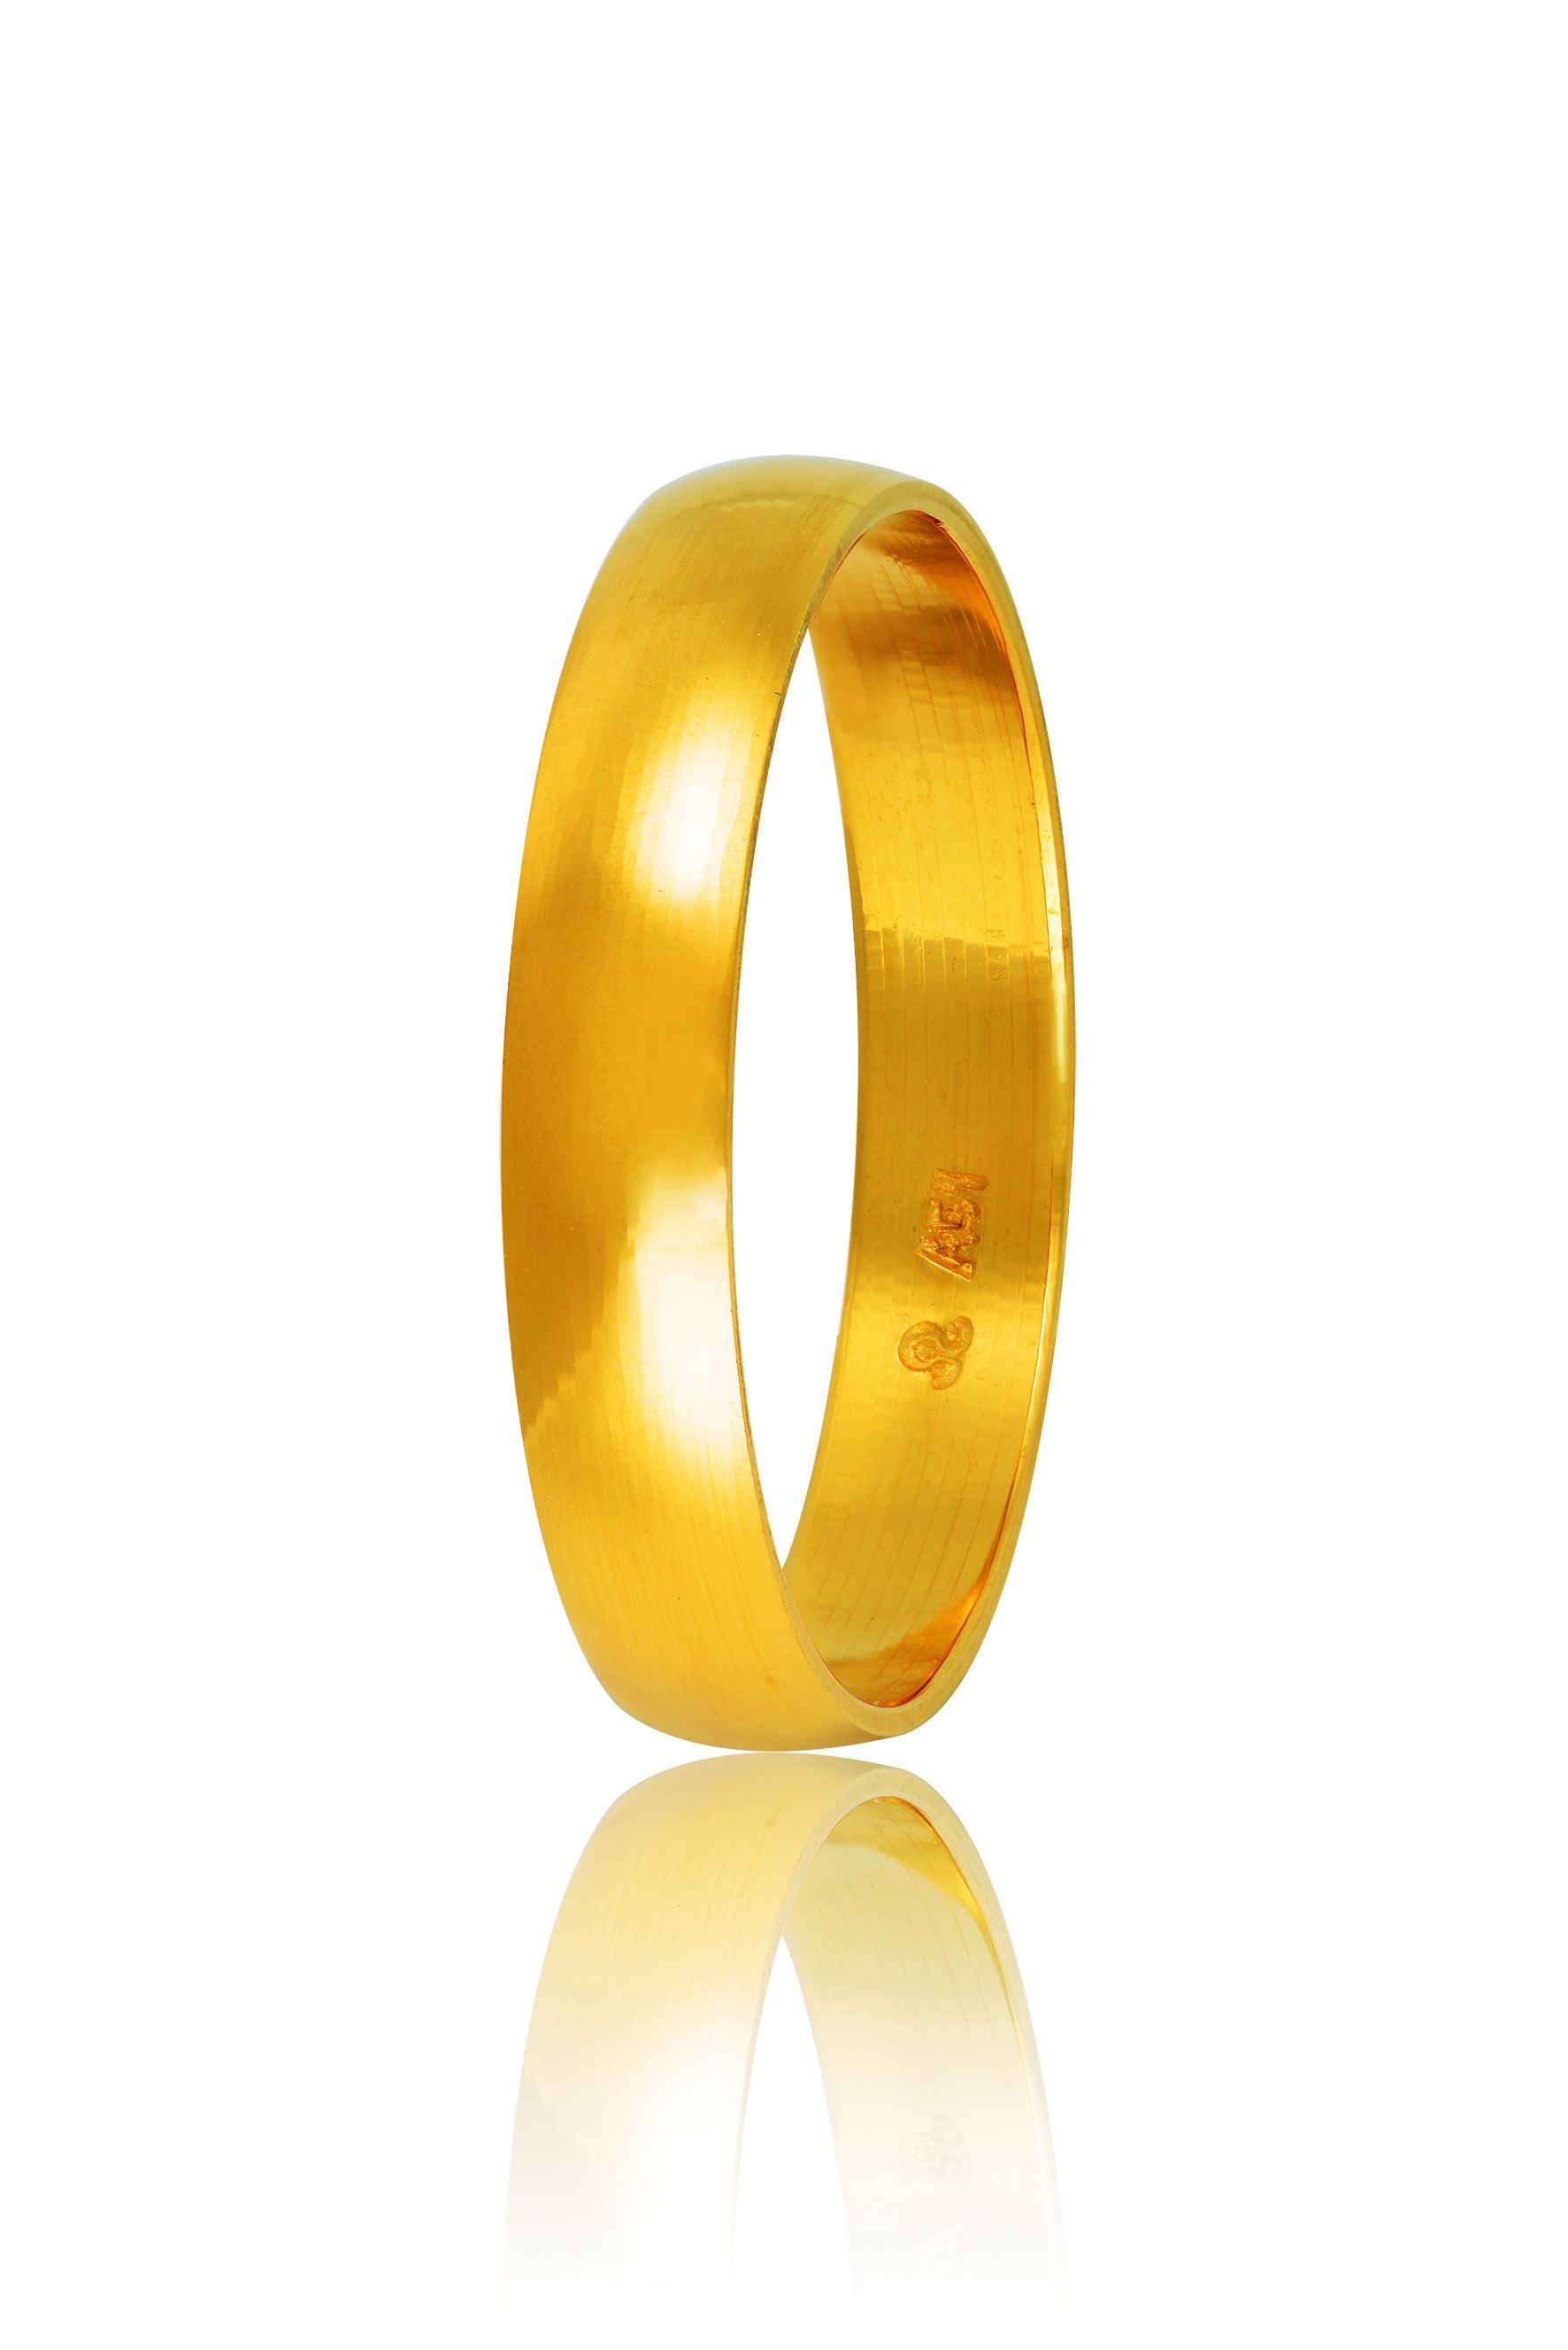 Golden wedding rings 5mm (code HR2Ay)